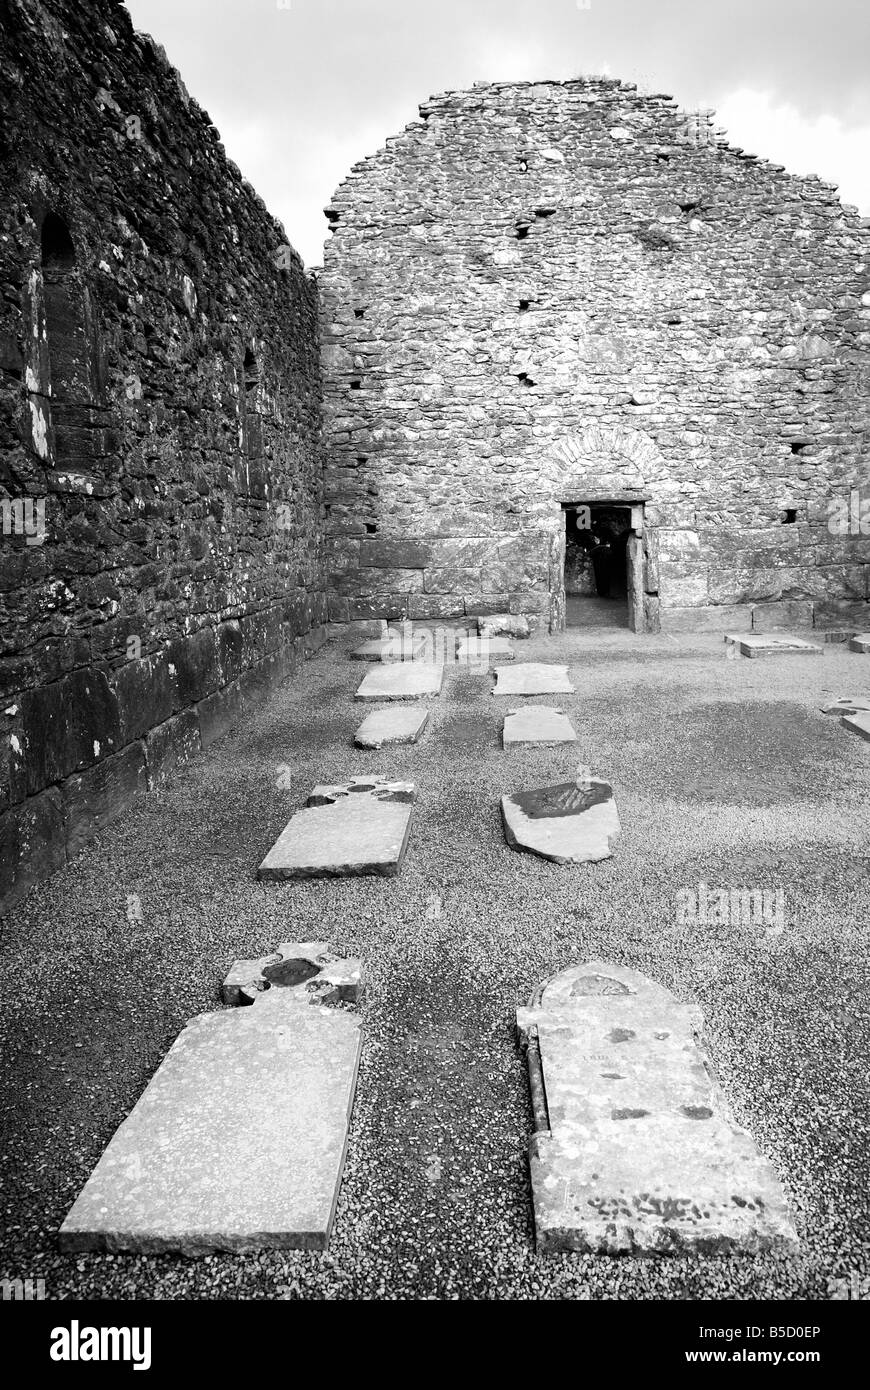 Cemetery with old tombstones on monastic site in Glendaloug near Dublin Ireland BW version Stock Photo